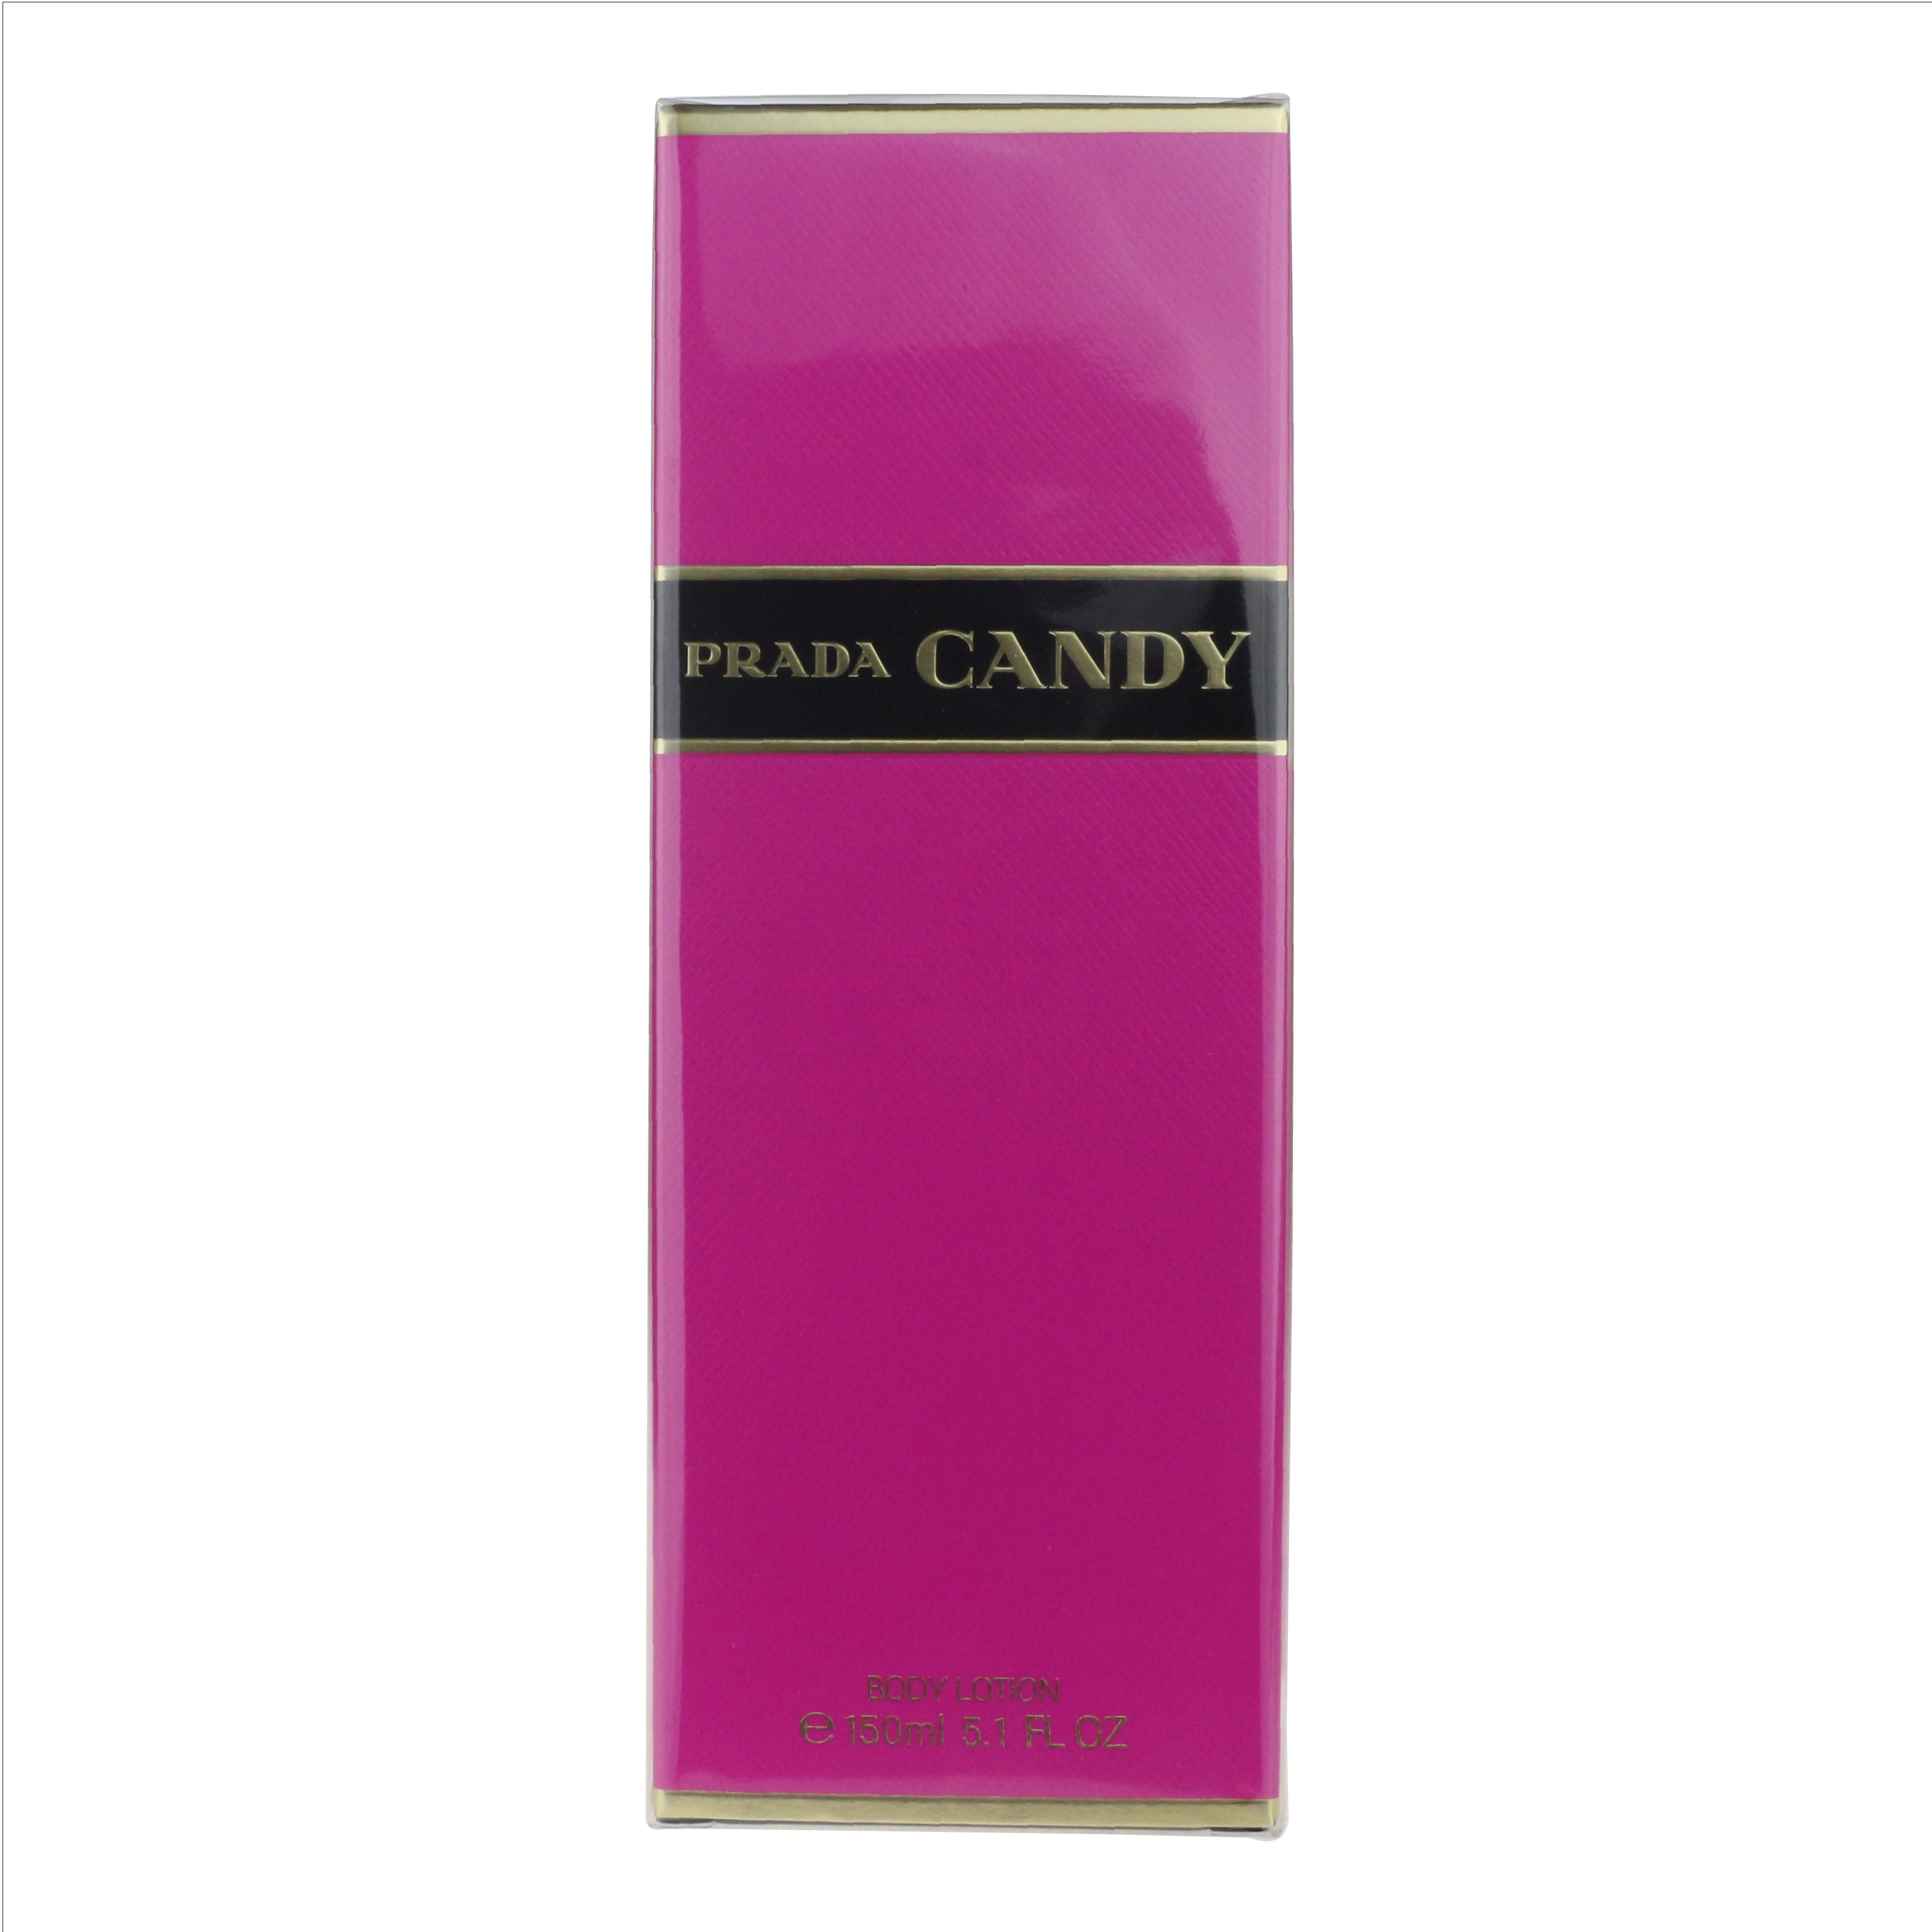 prada candy lotion 2.5 oz